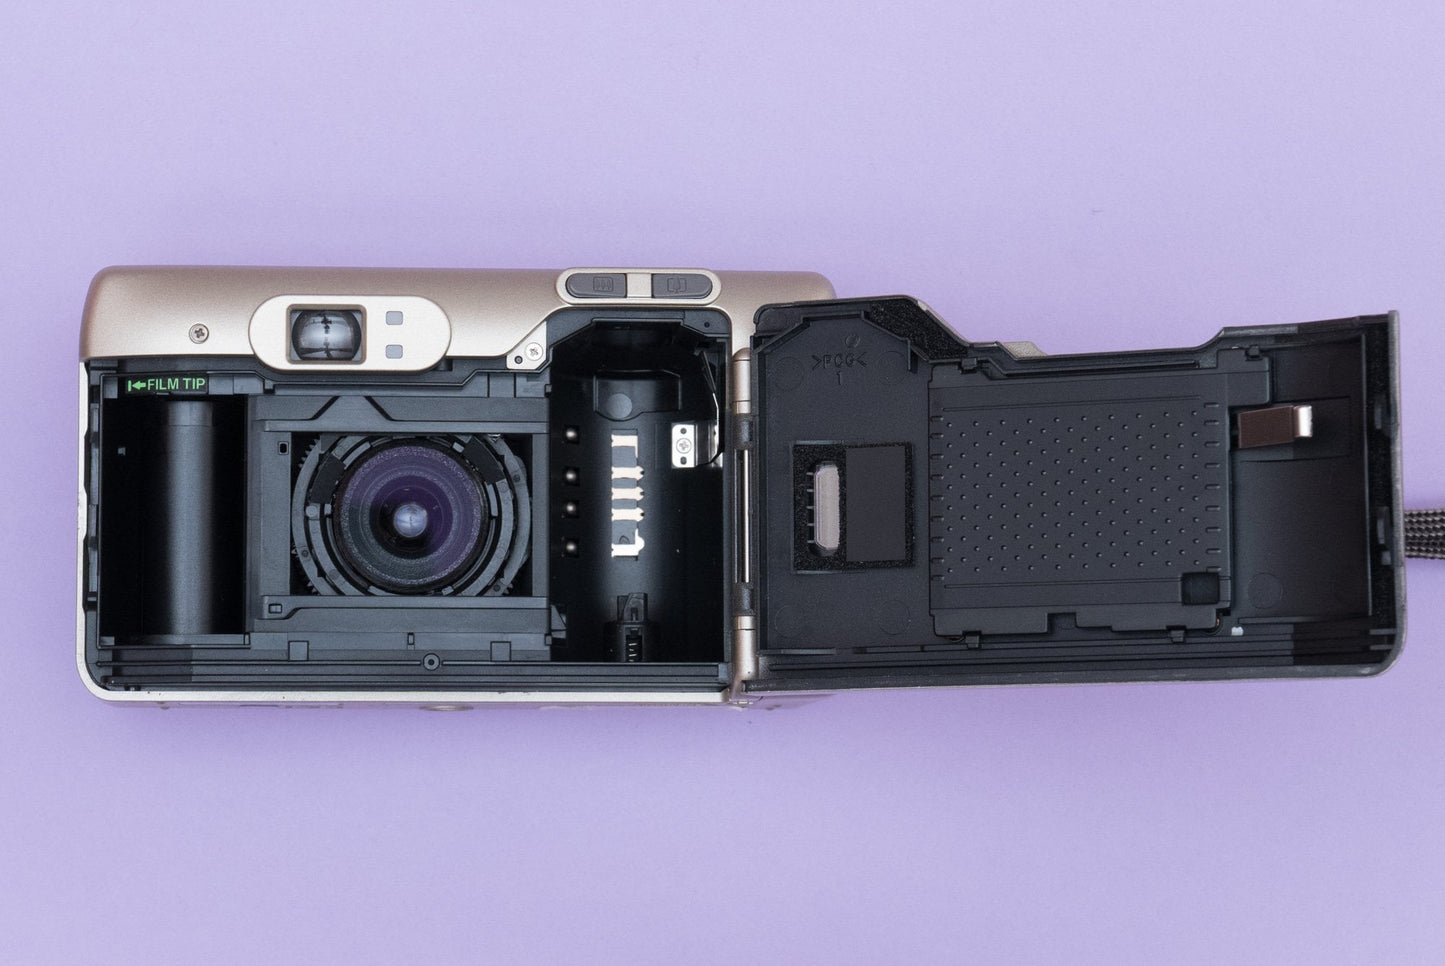 Nikon LiteTouch Zoom 100W Compact 35mm Film Camera